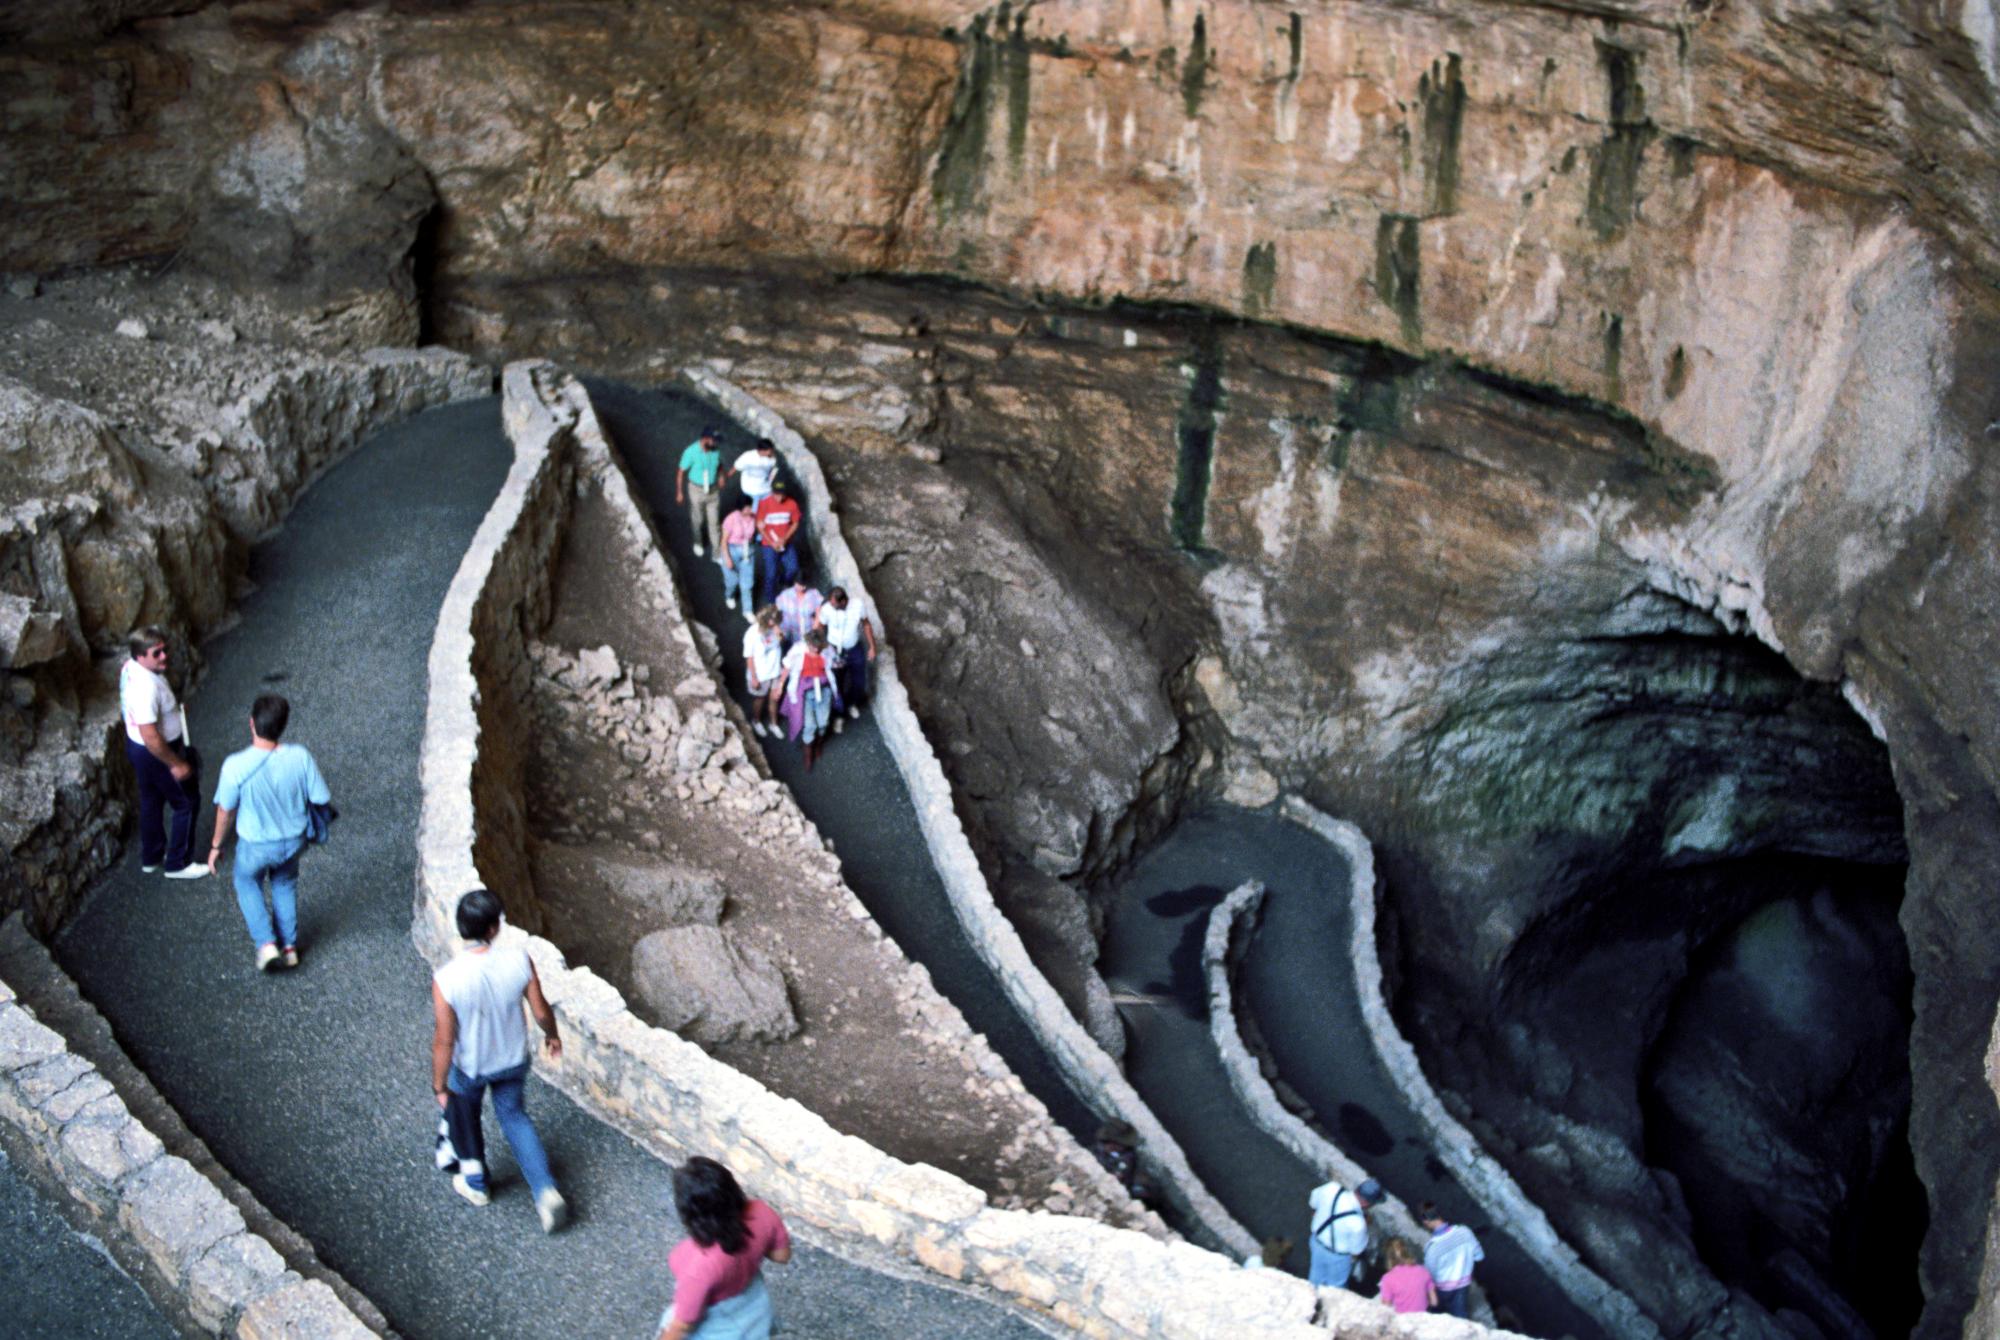 Western US - Cavern Entrance